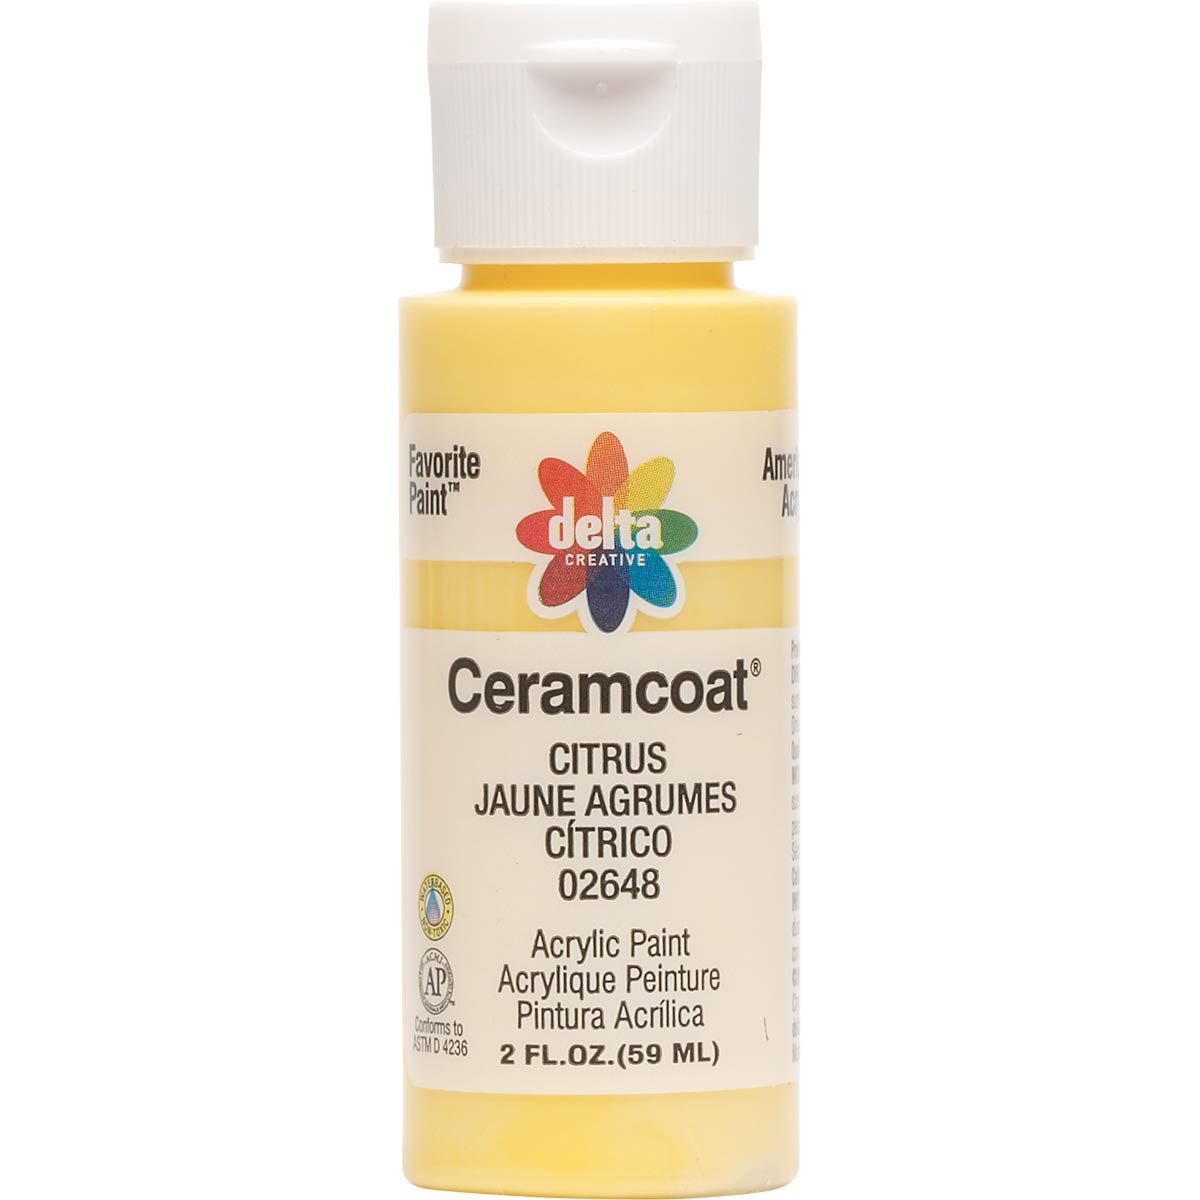 Delta Ceramcoat Acrylic Paint - Citrus, 2 oz. - 026480202W